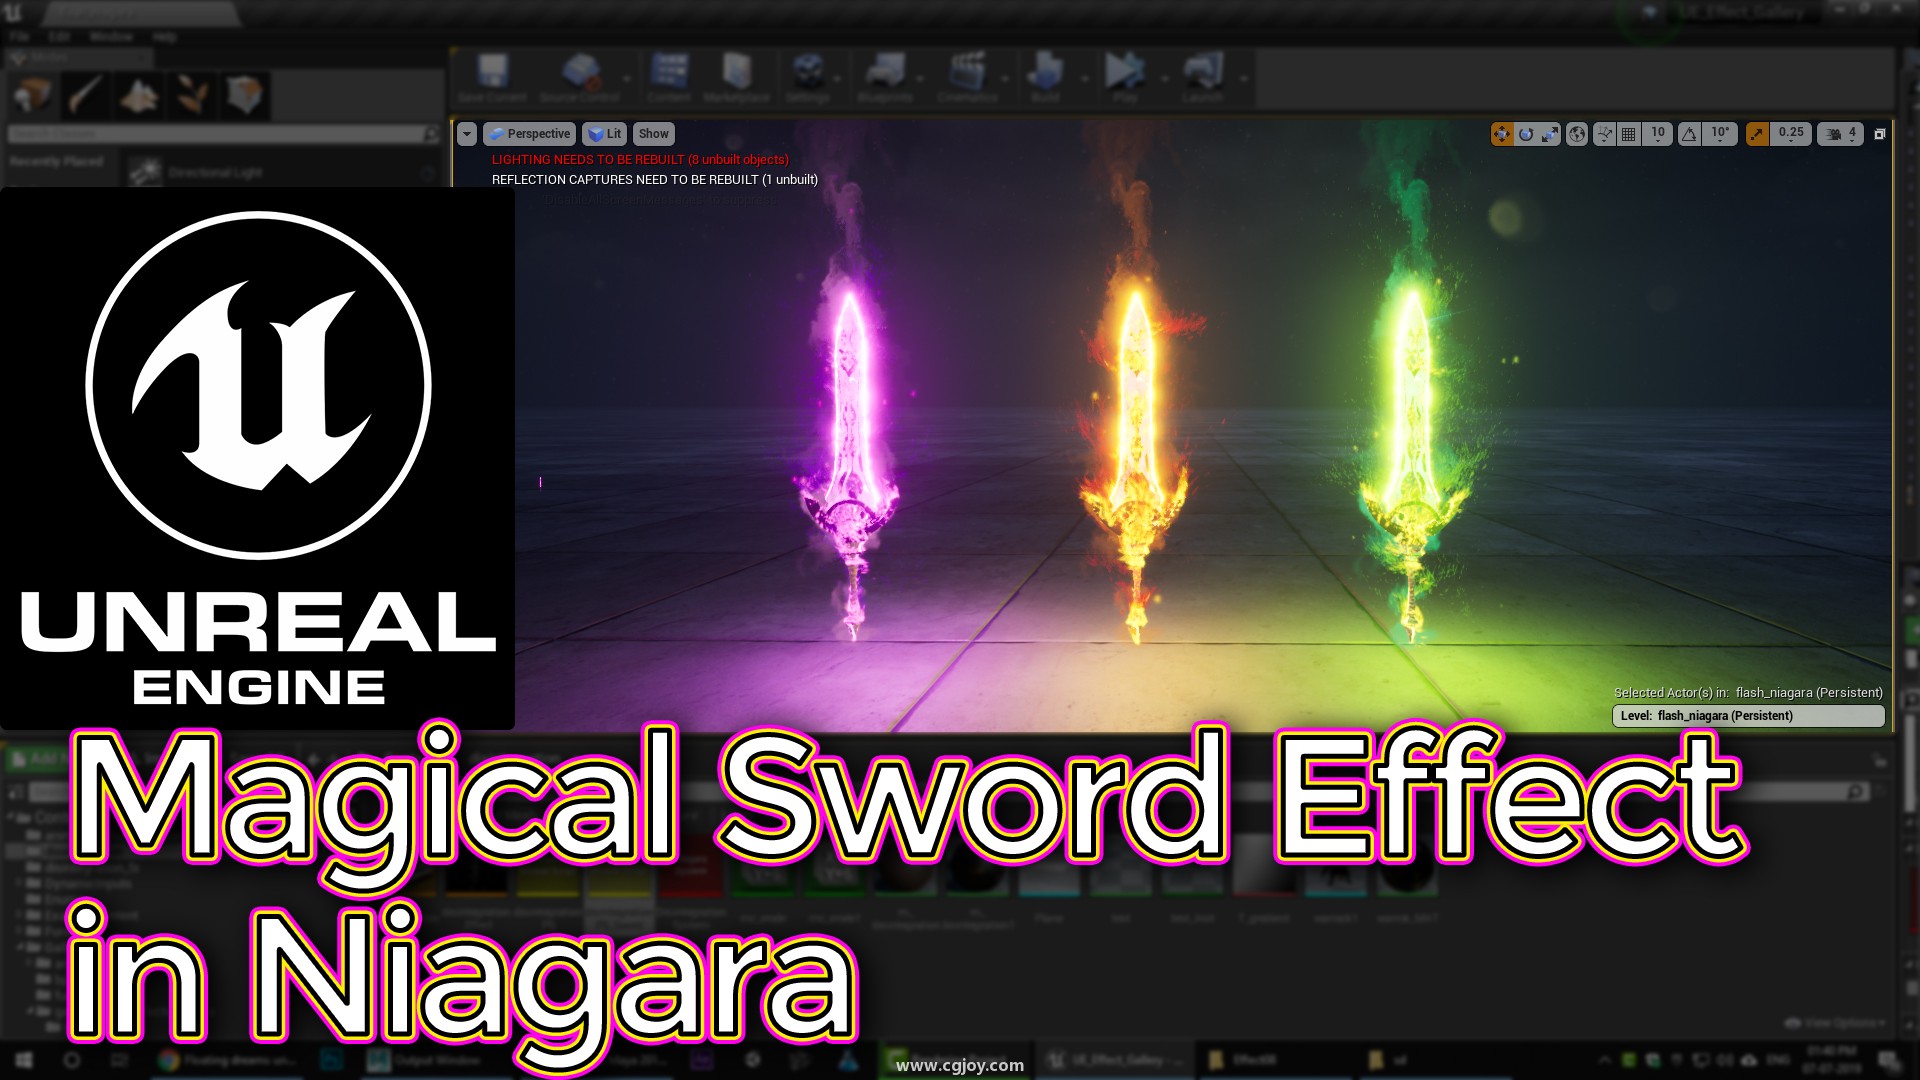 magical_Sword_effect_in_niagara.jpg